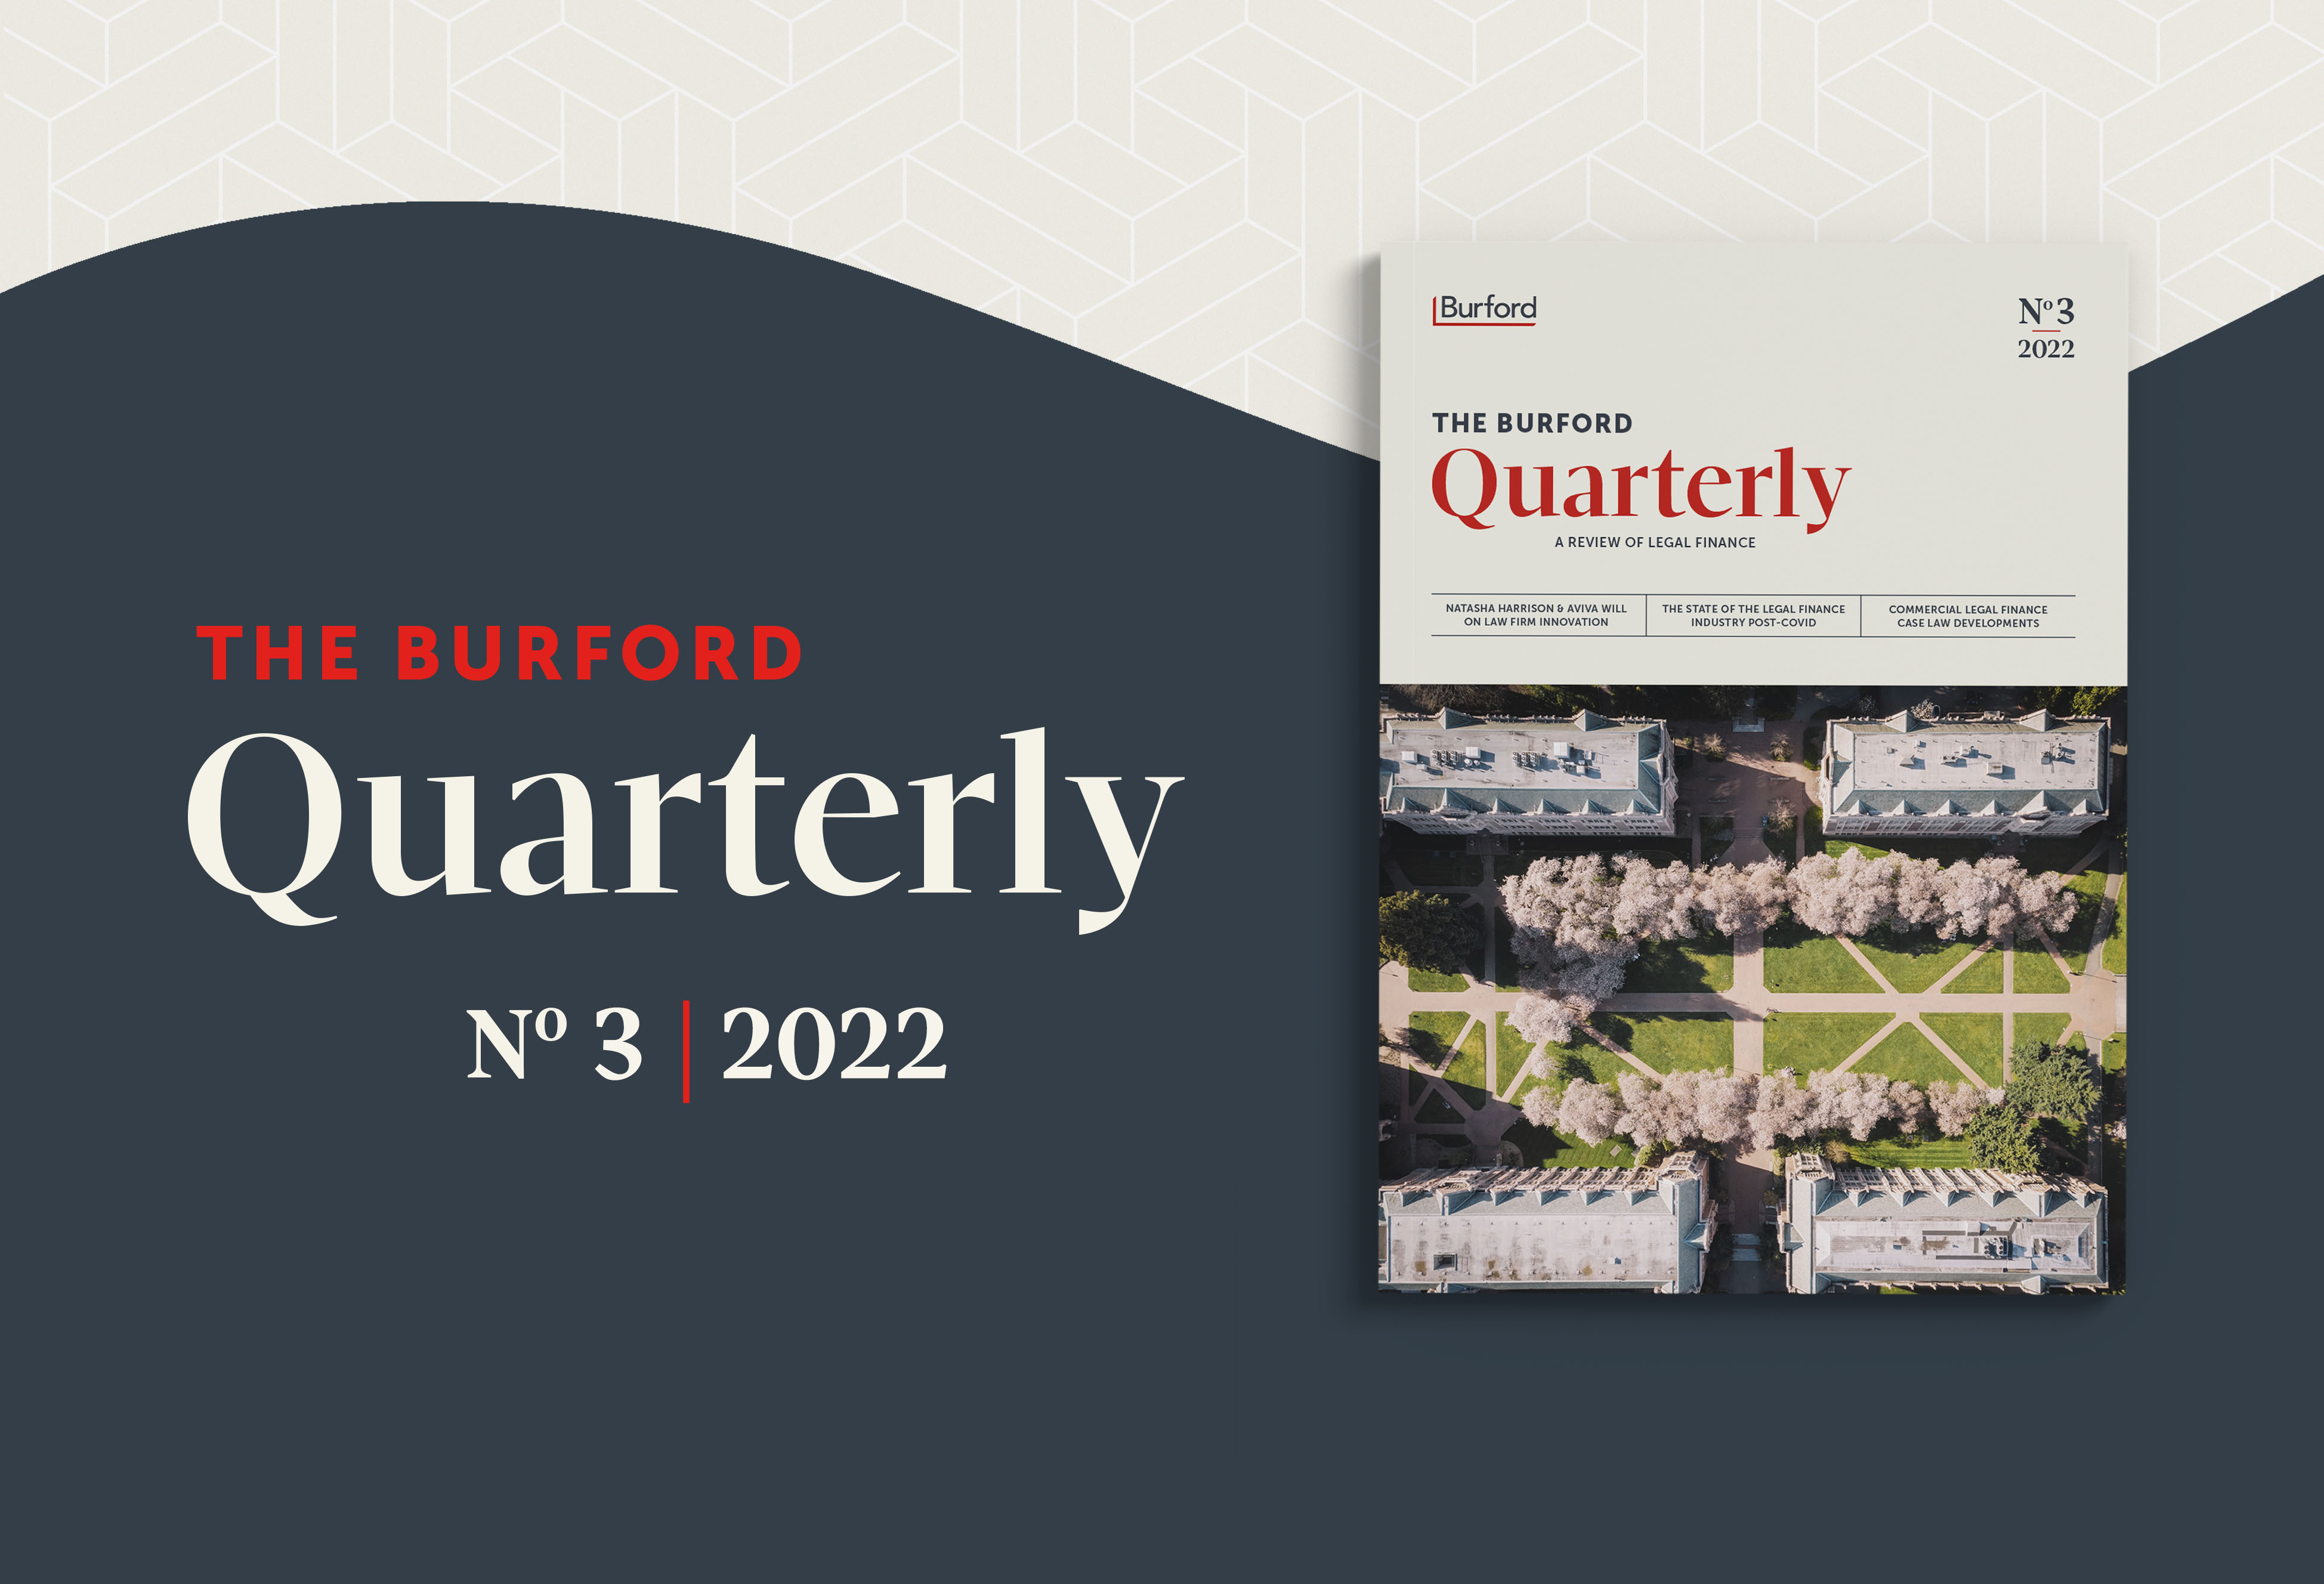 Quarterly No 3 2022 Website Thumbnail (New Aspect Ratio)